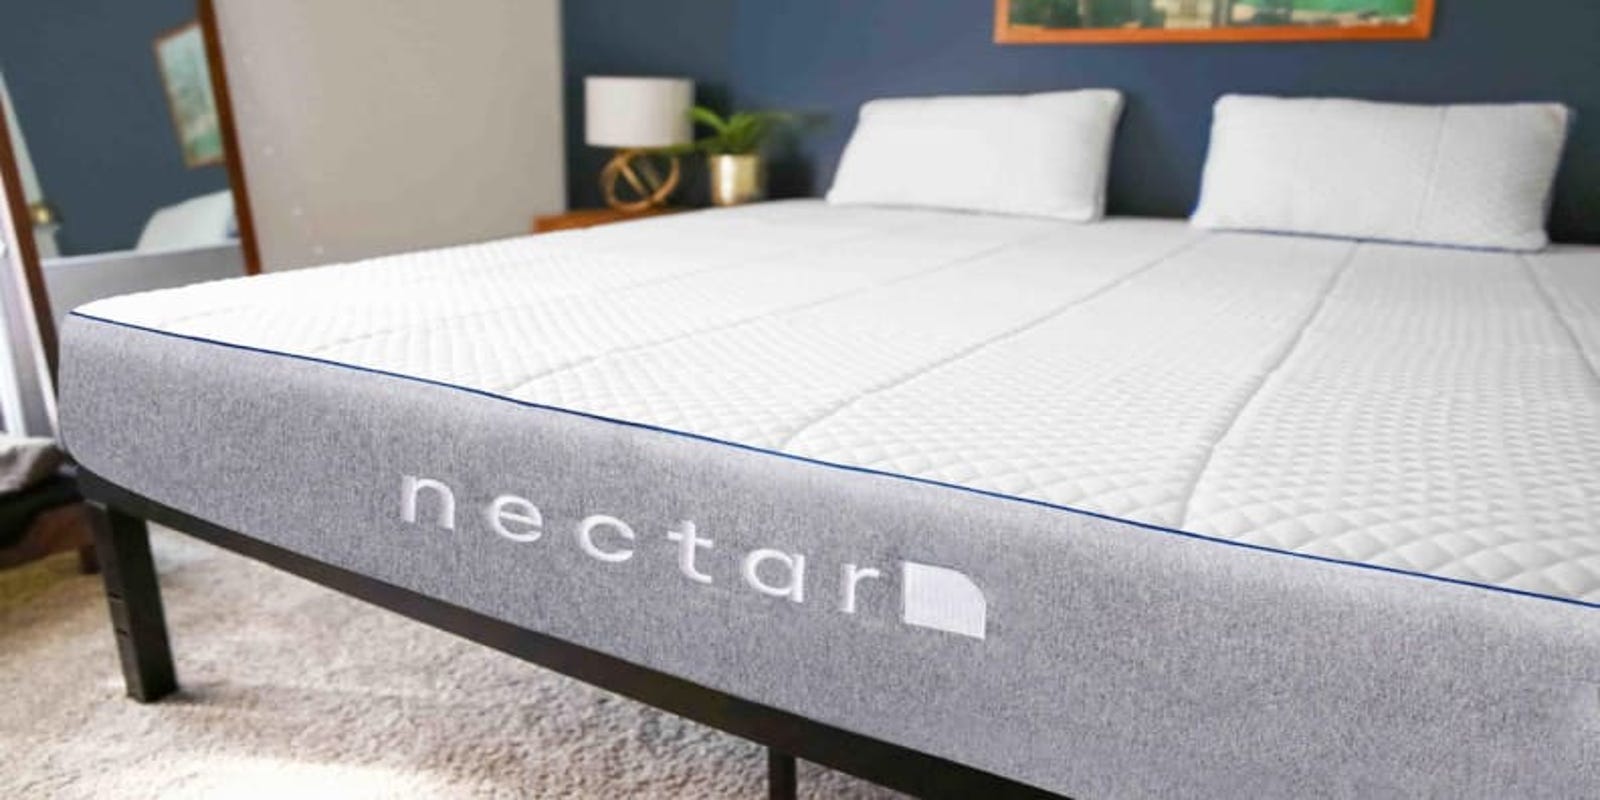 nectar mattress sleep judge